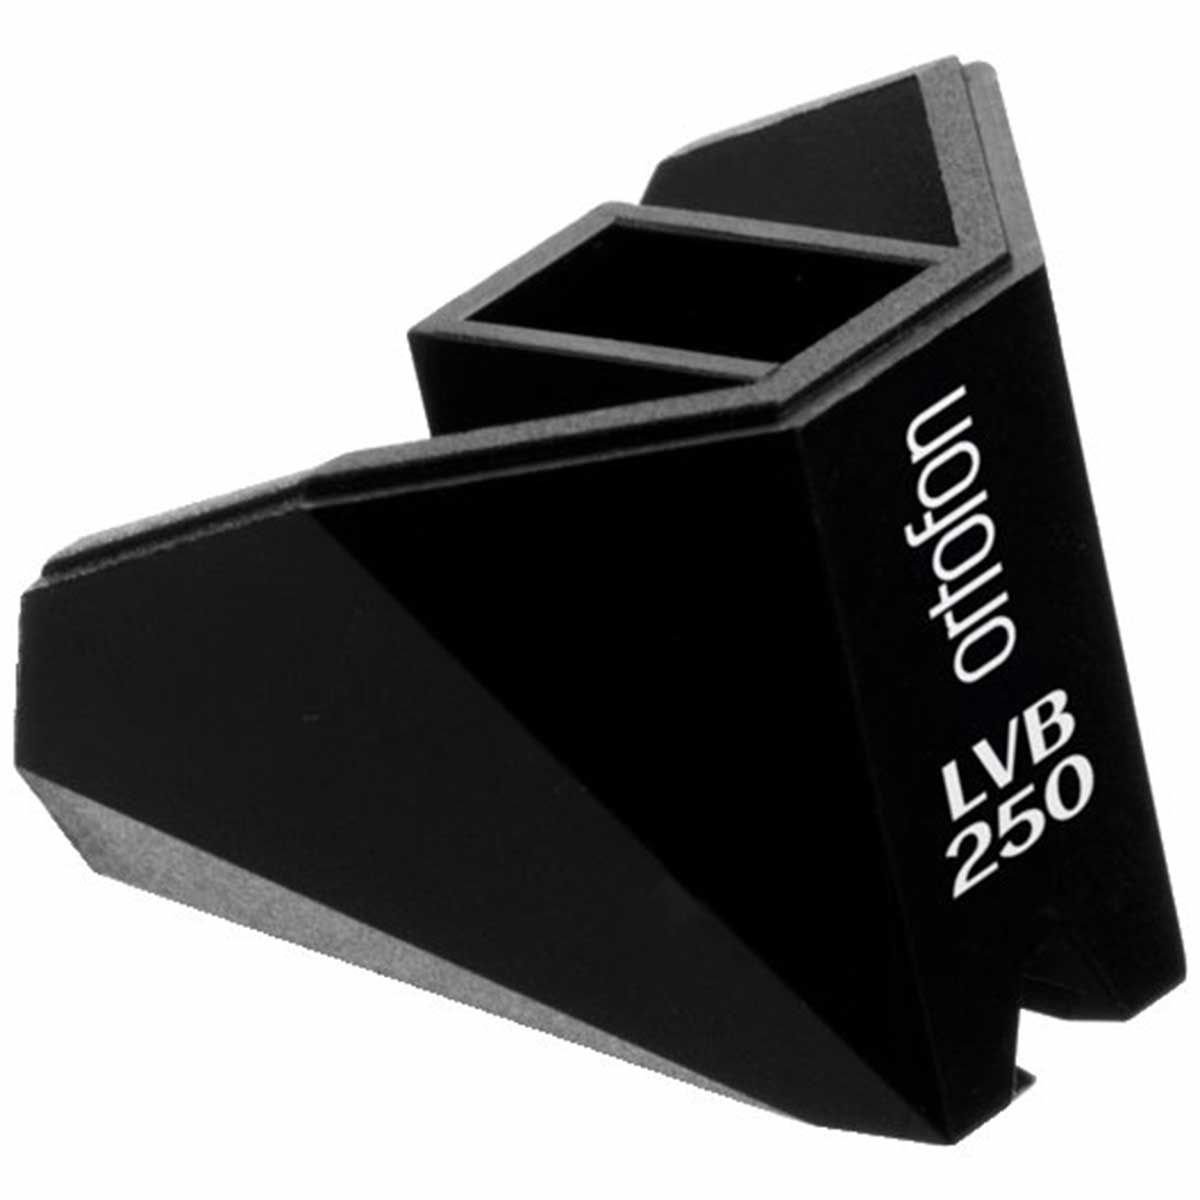 Ortofon 2M Black LVB 250 Replacement Stylus, front angle